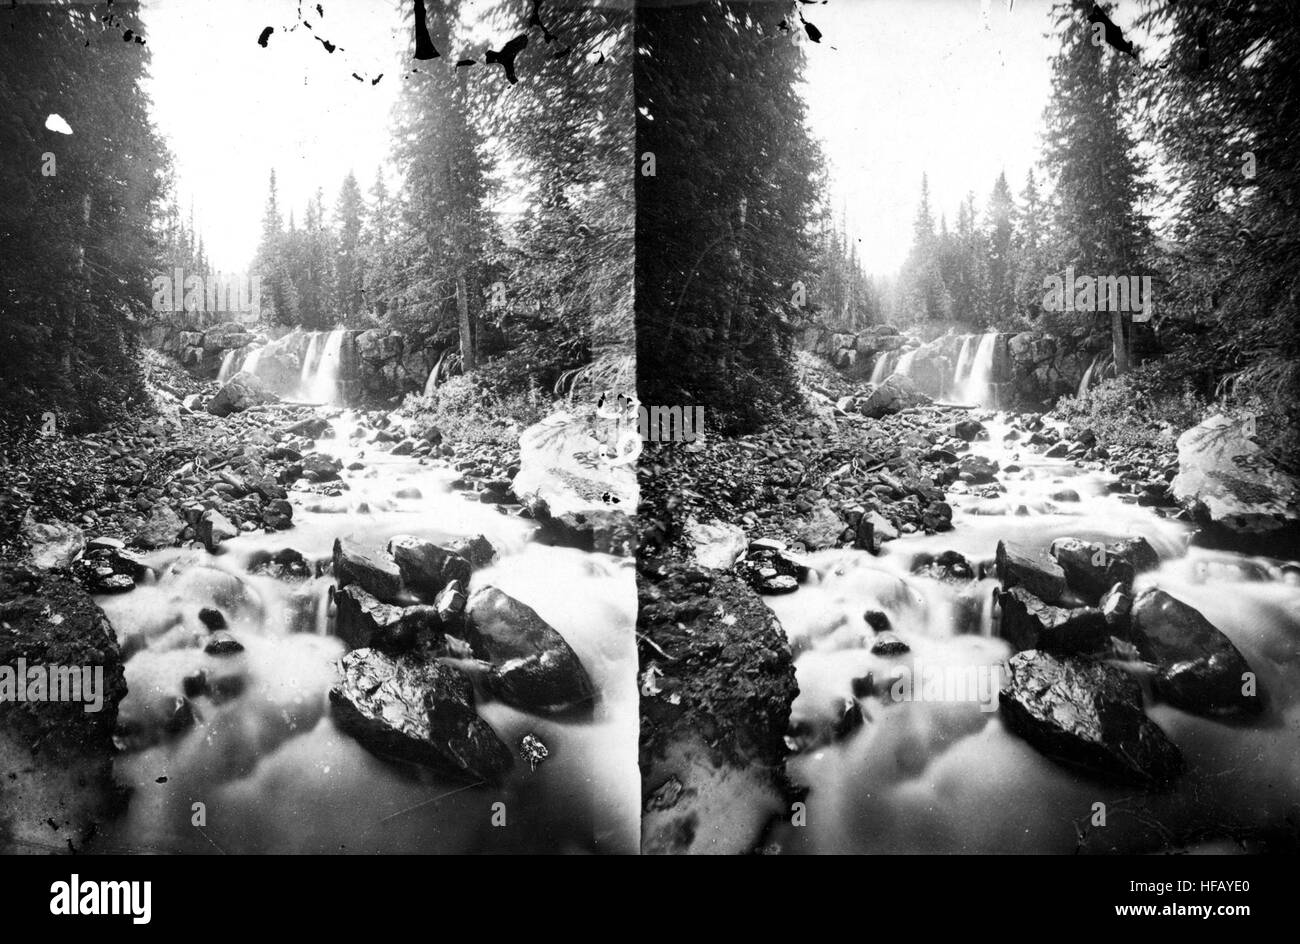 Cascade of Middle Creek Gallatin County, Montana 1872 (Stereoscopic view) Stock Photo